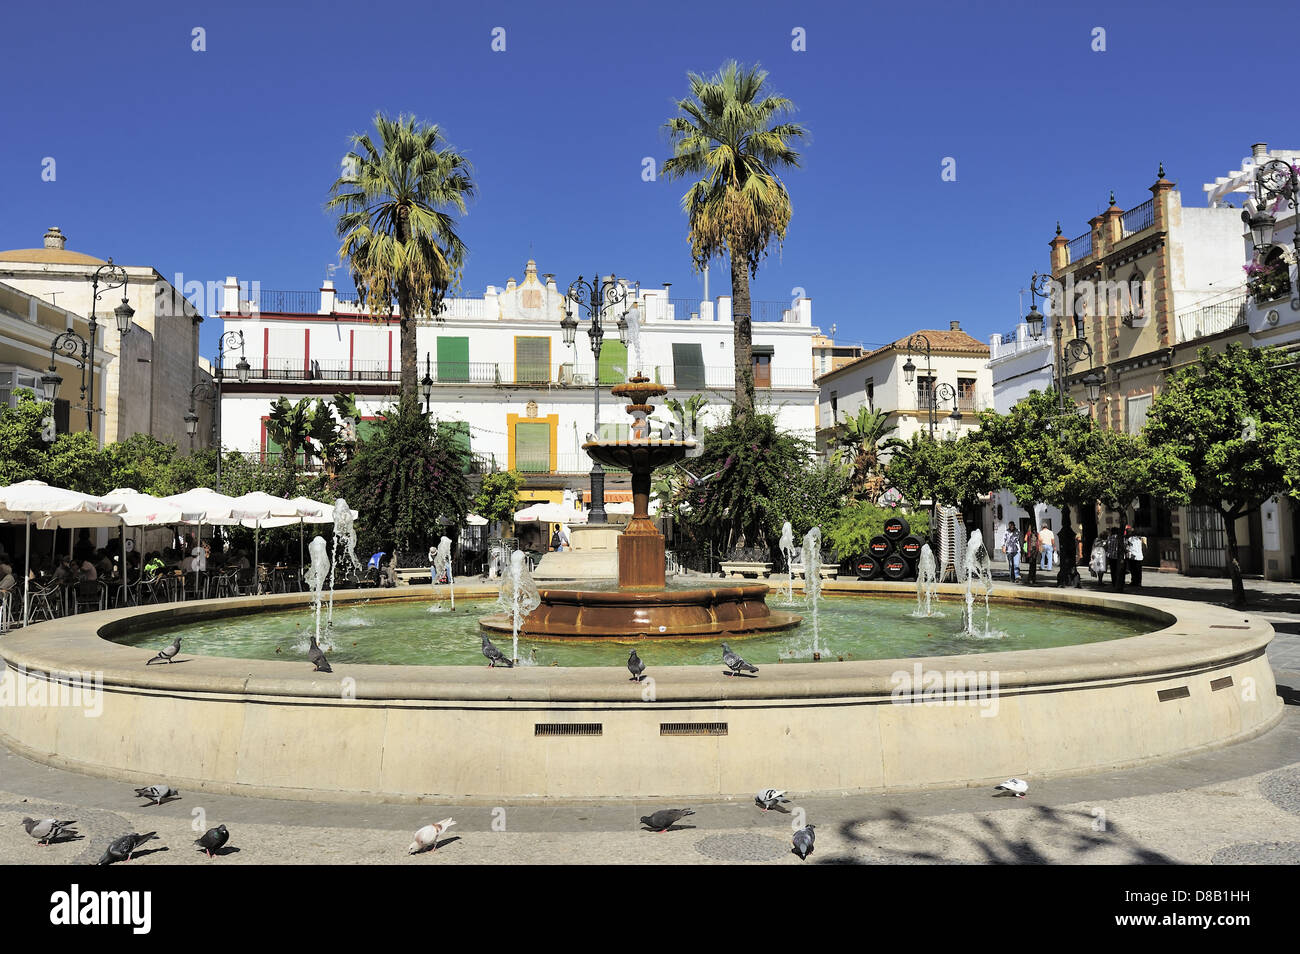 Plaza del Cabildo (Goverment Square), Sanlucar de Barrameda, Spain Stock Photo